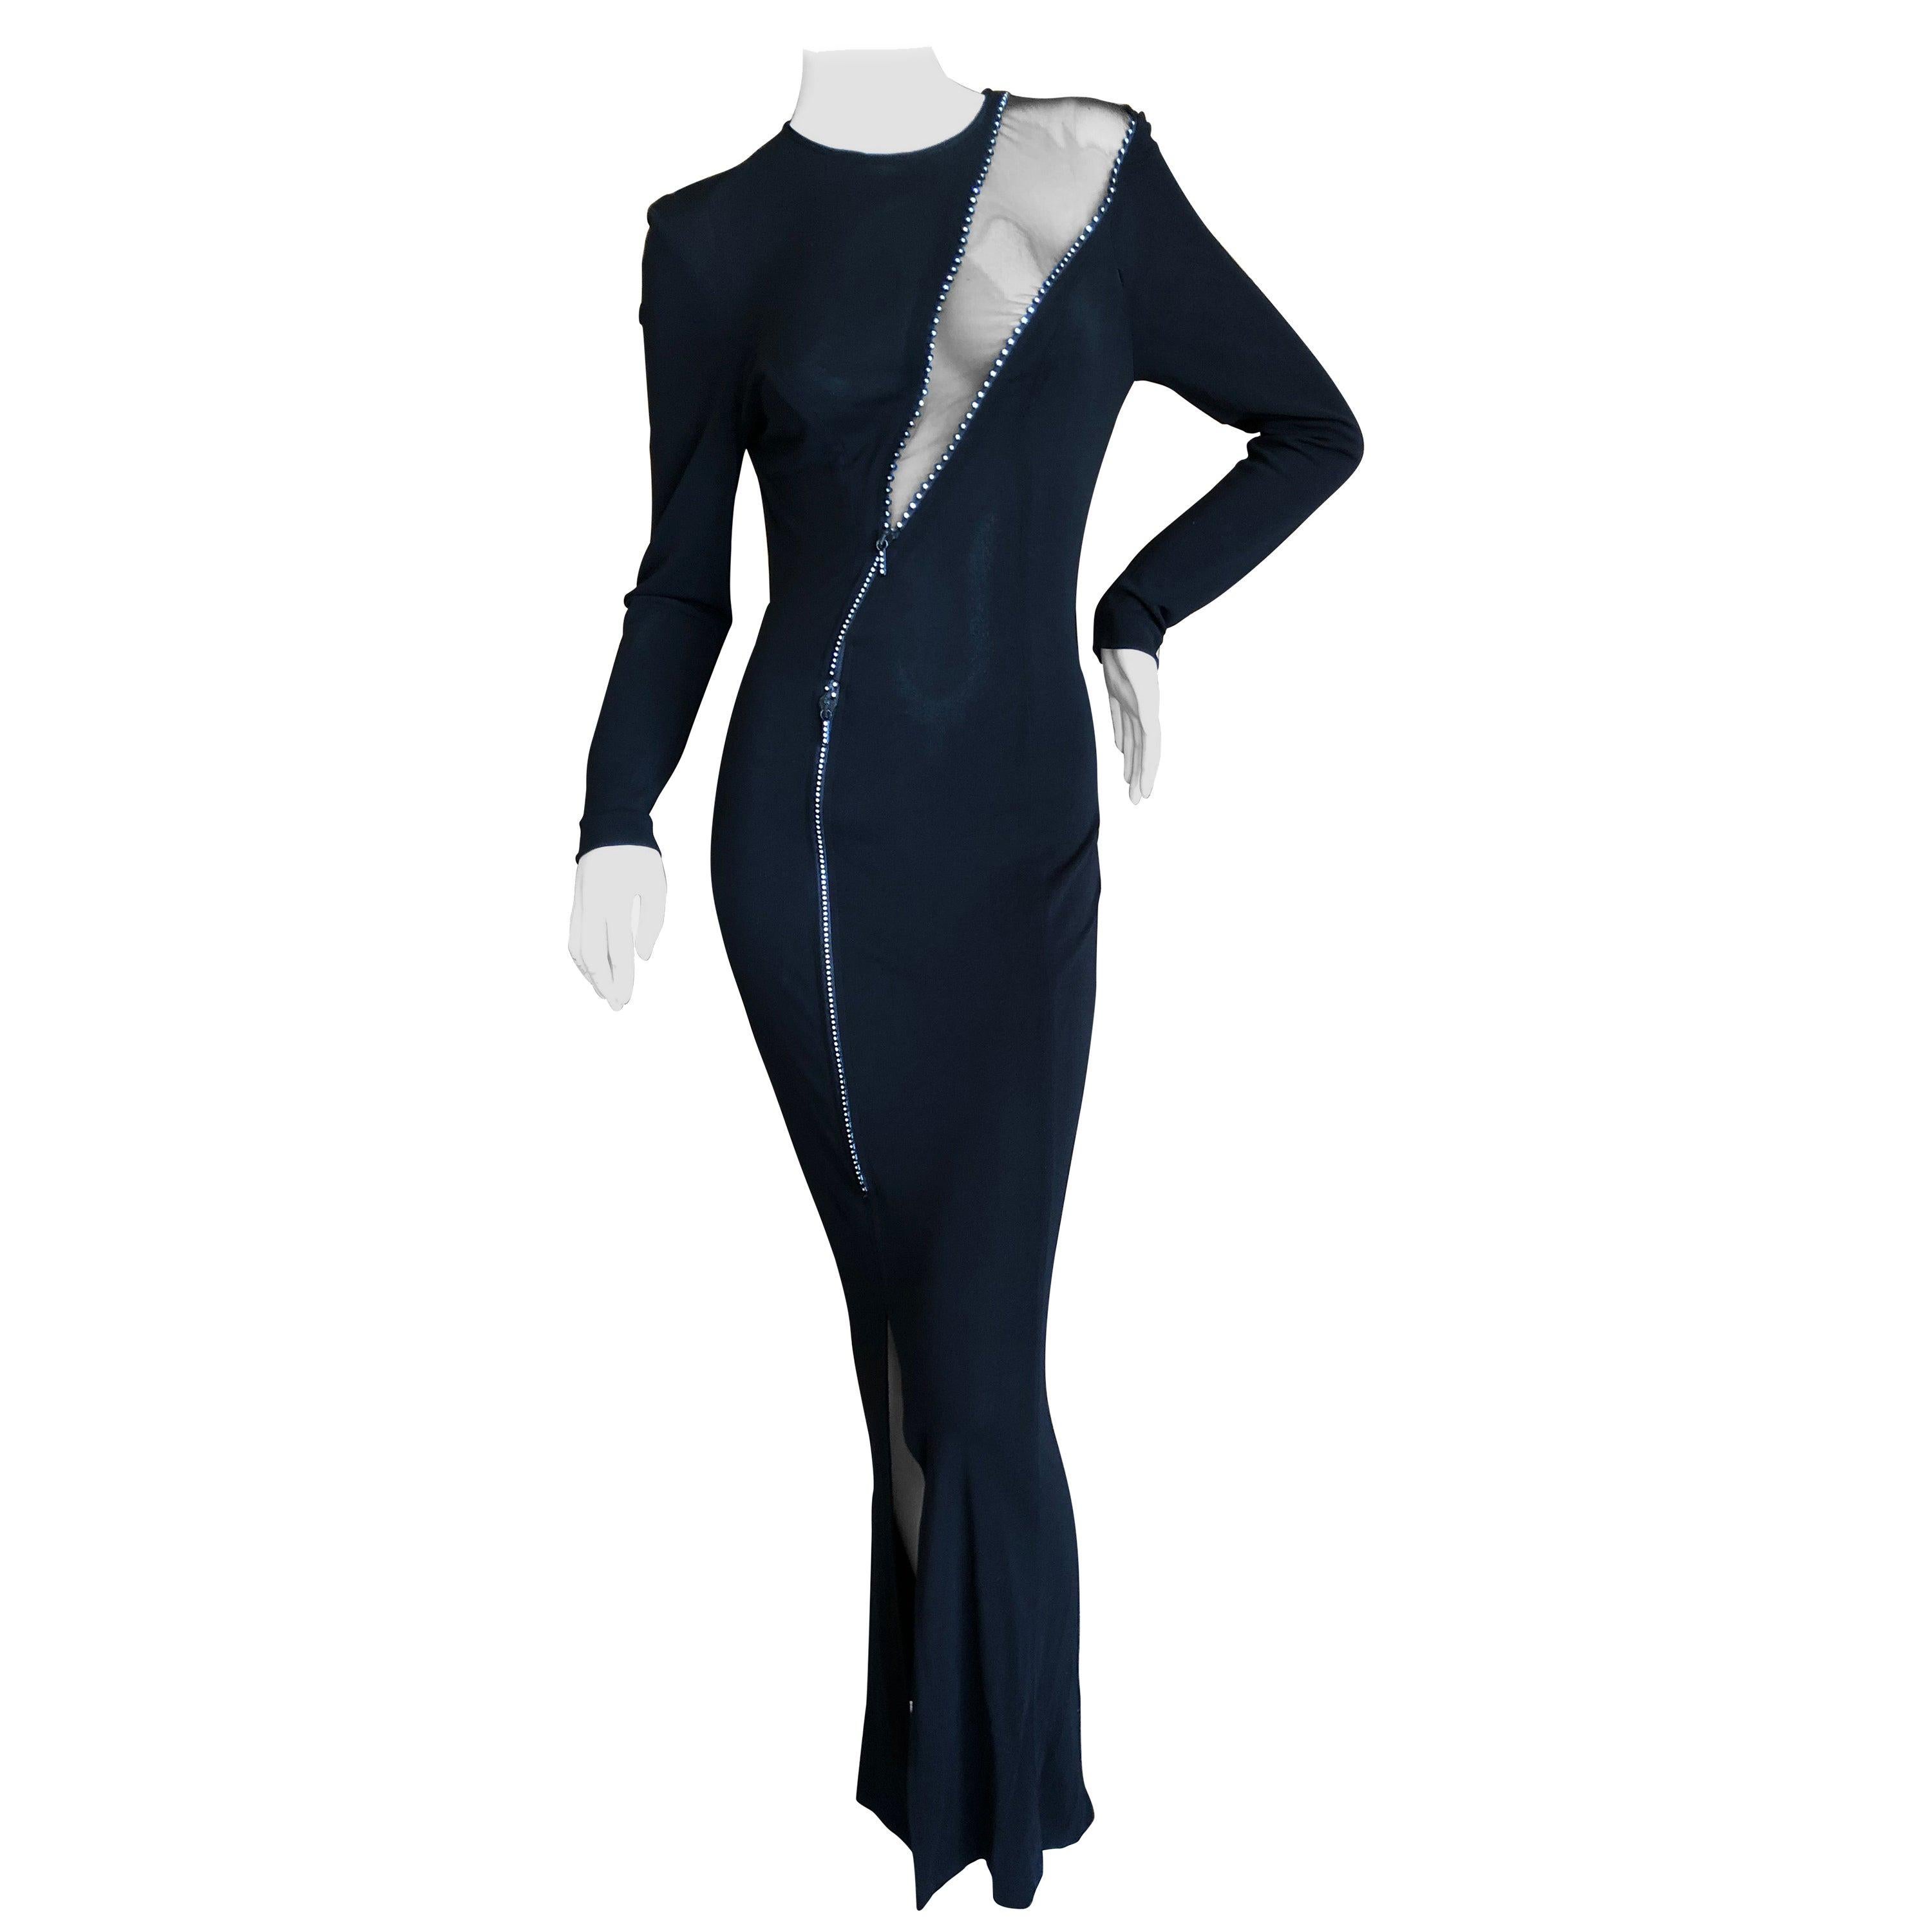 Thierry Mugler Vintage 1980's Black Evening Dress w Sheer Crystal Zipper Details For Sale